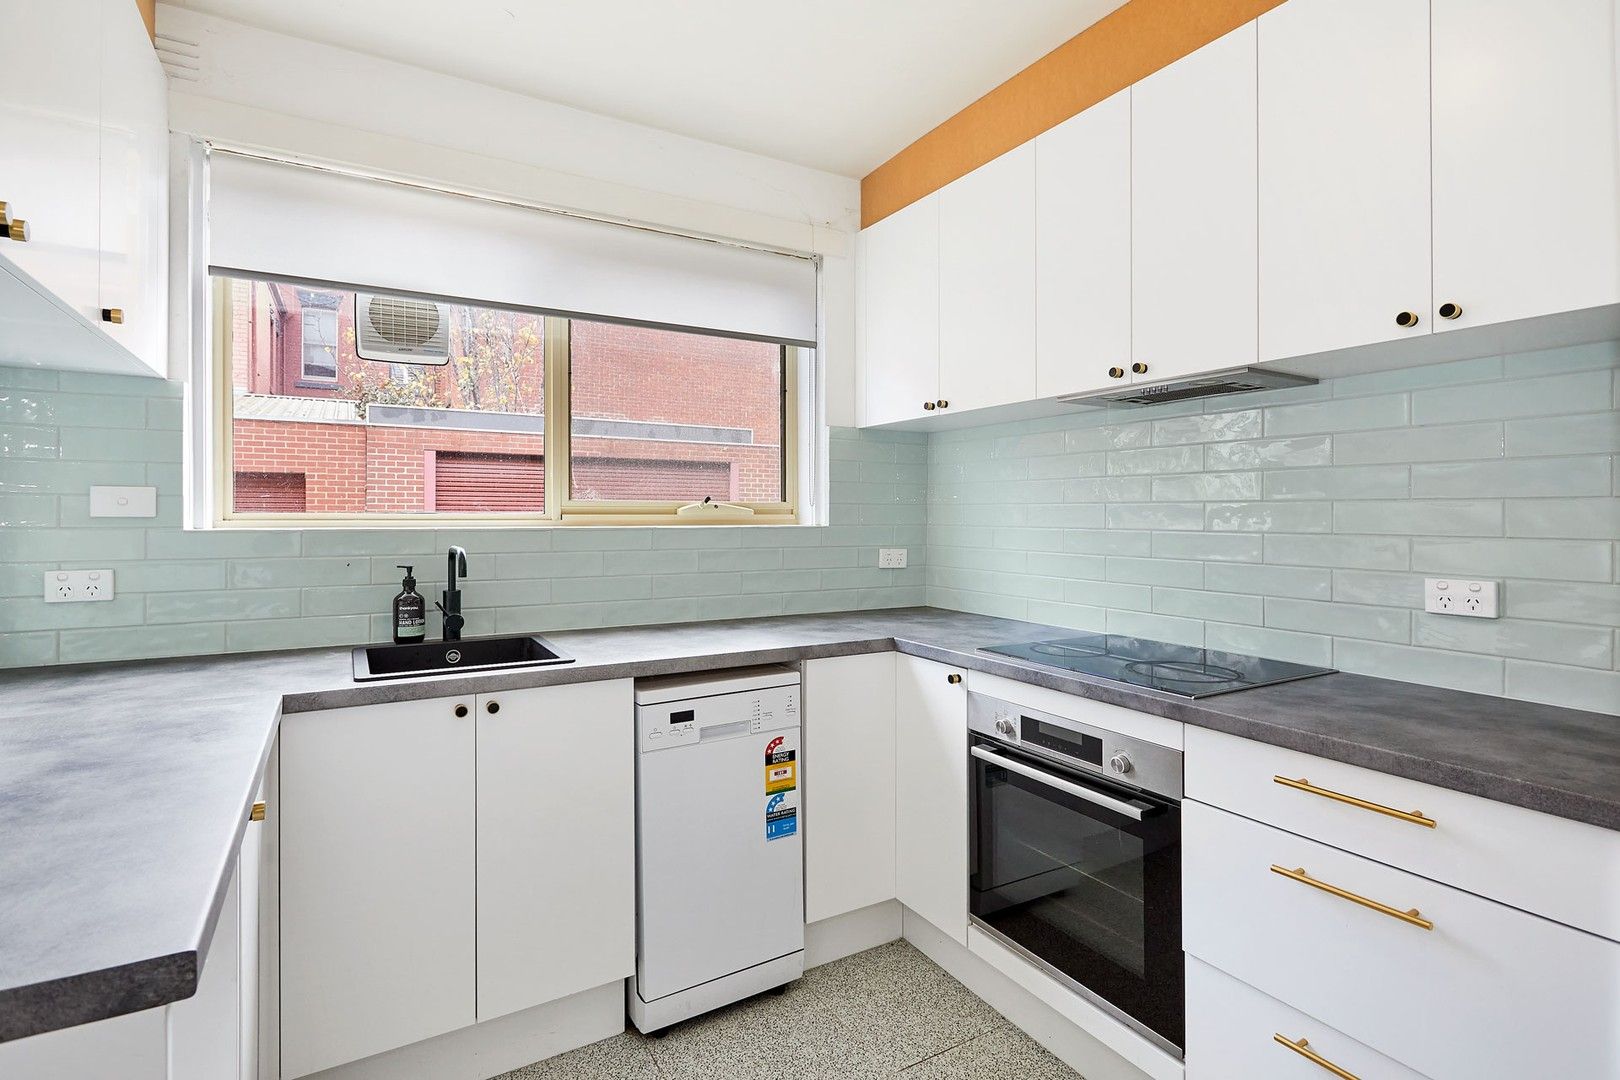 2 bedrooms Apartment / Unit / Flat in 2/23 Park Street ST KILDA WEST VIC, 3182